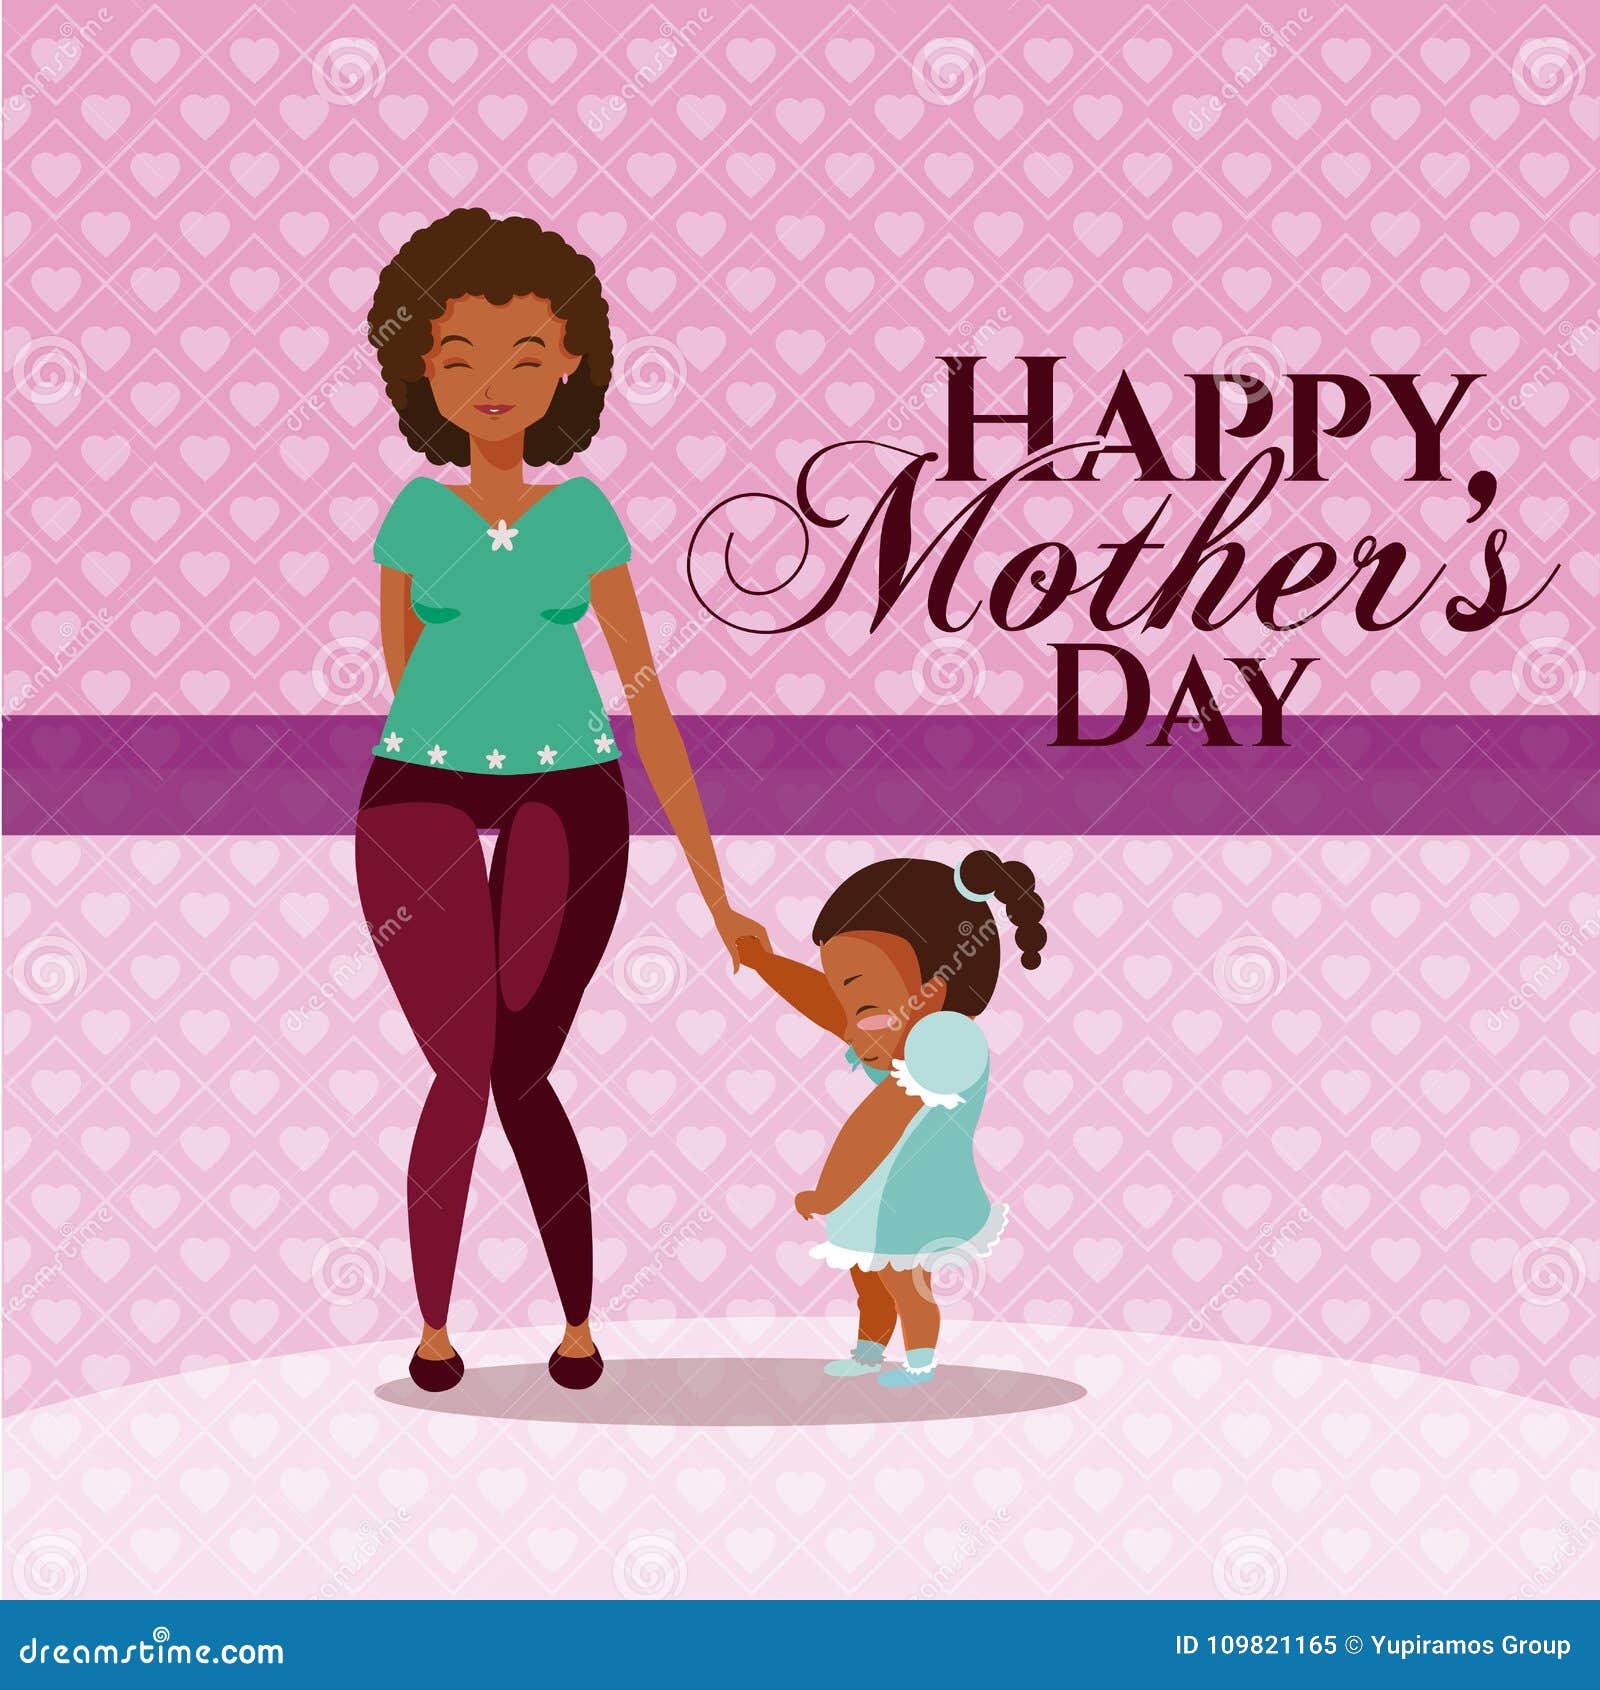 Happy mothers day cartoon stock vector. Illustration of beautiful